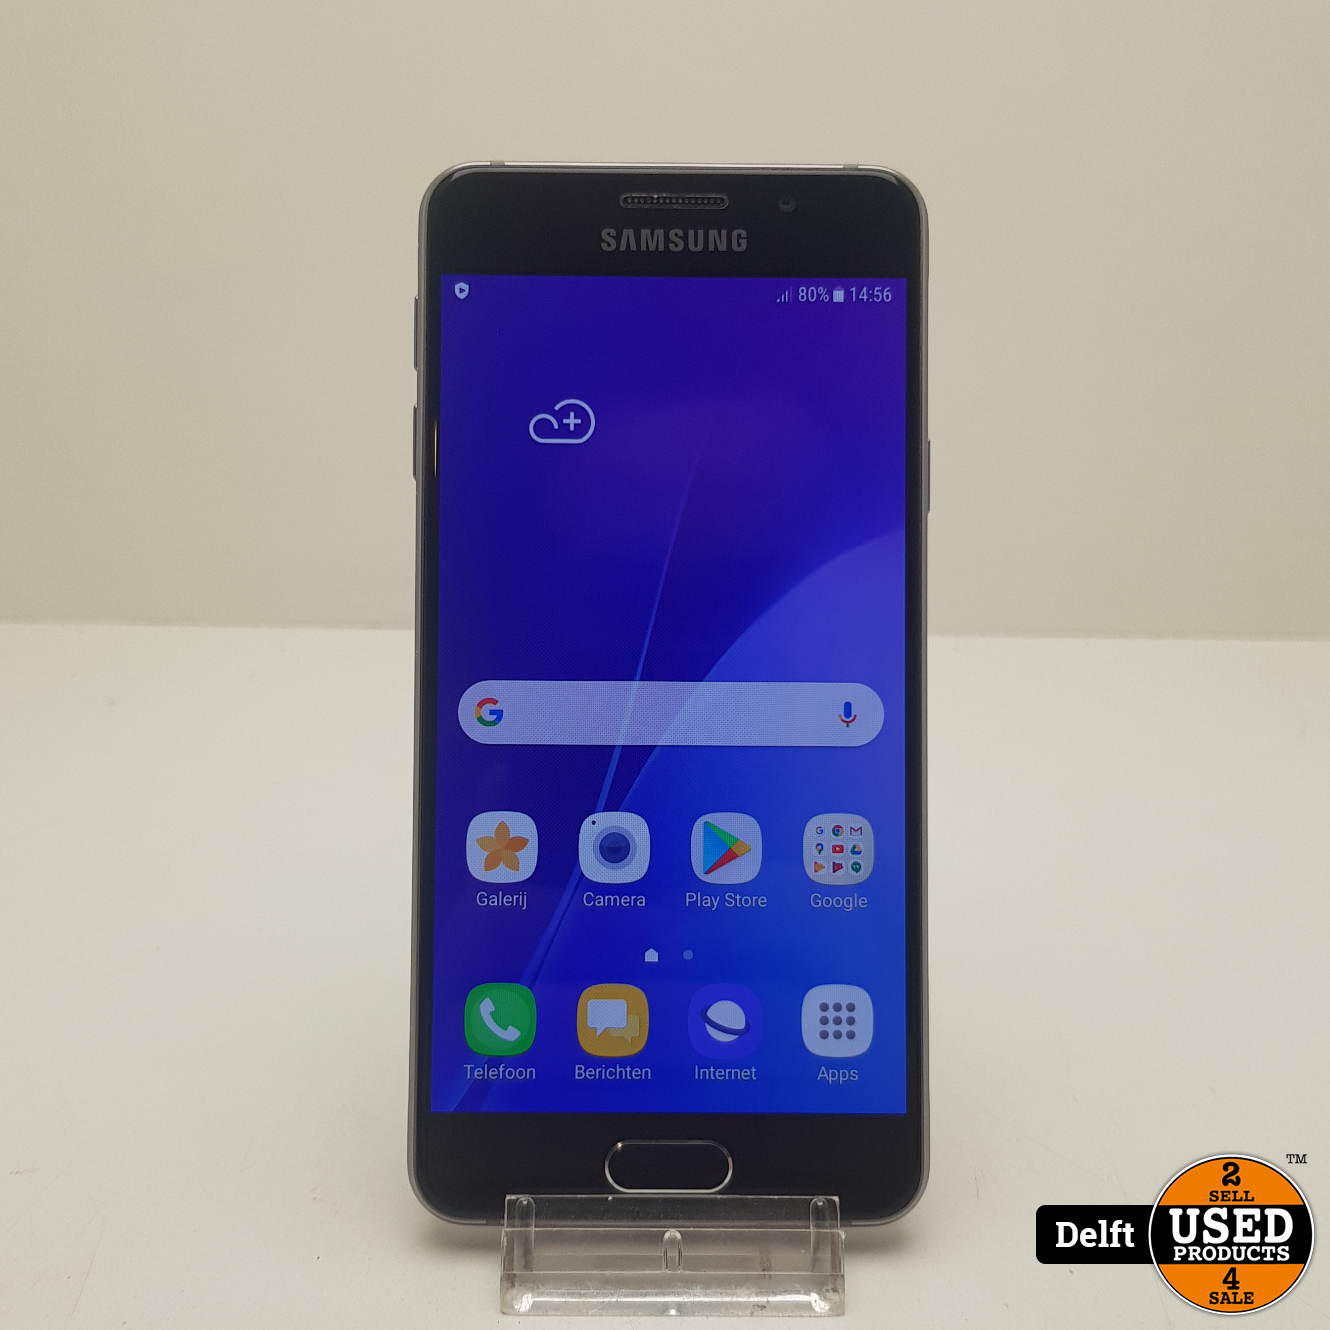 Samsung Galaxy A3 2016 16GB Black nette staat maanden garantie - Used Products Delft